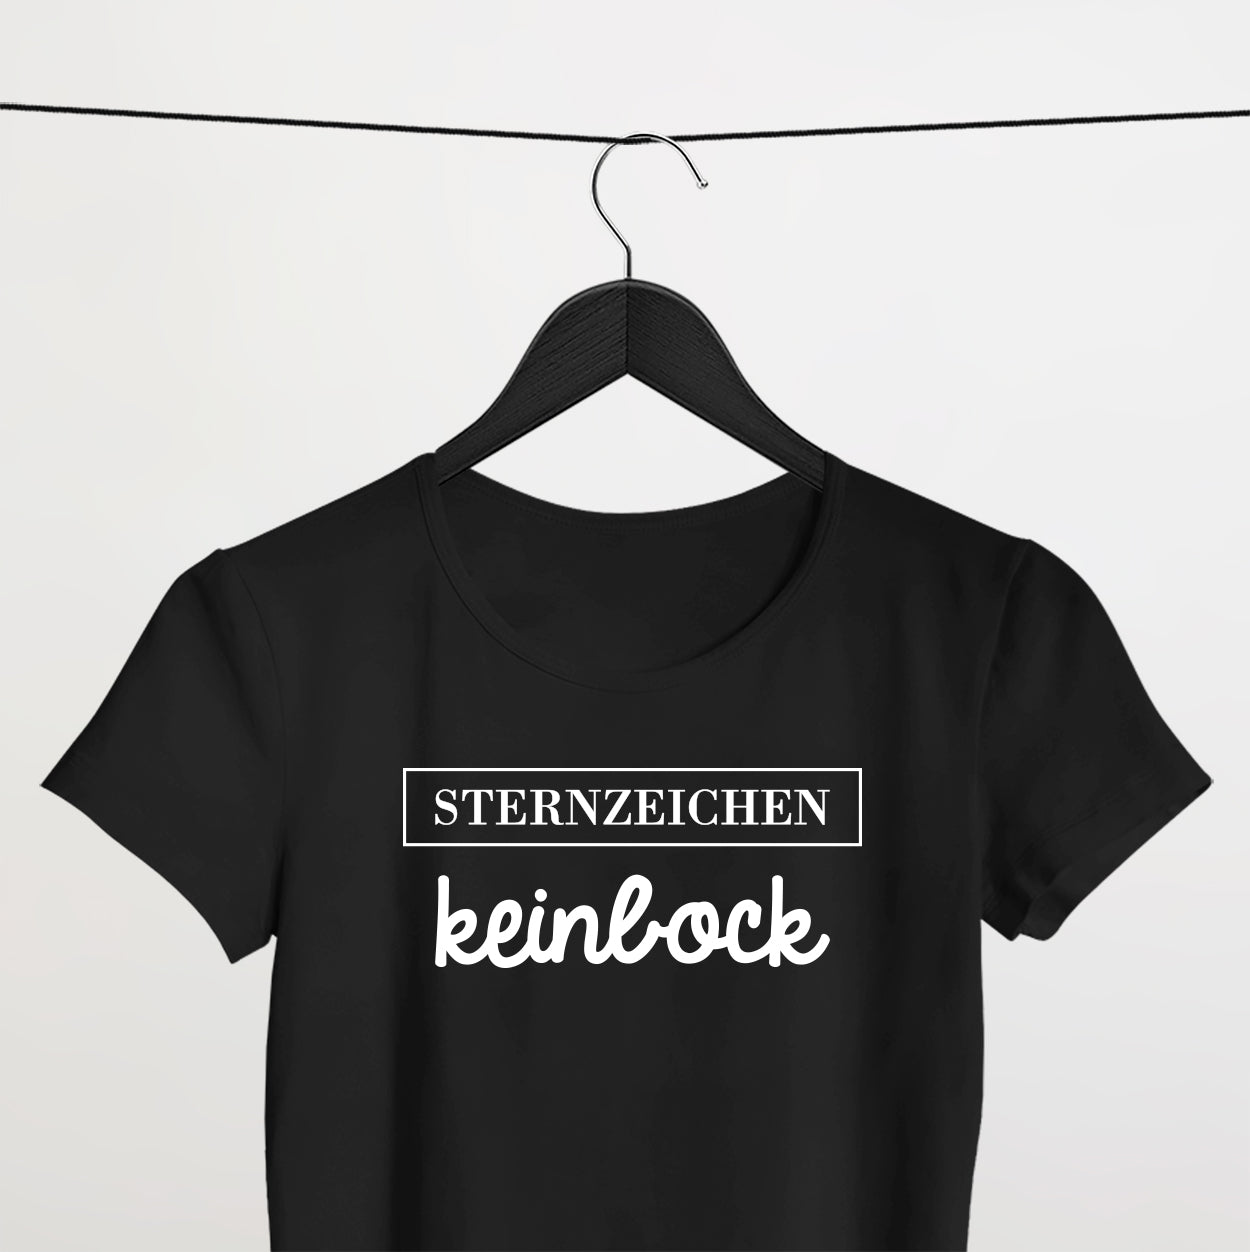 KEINBOCK Shirt Black